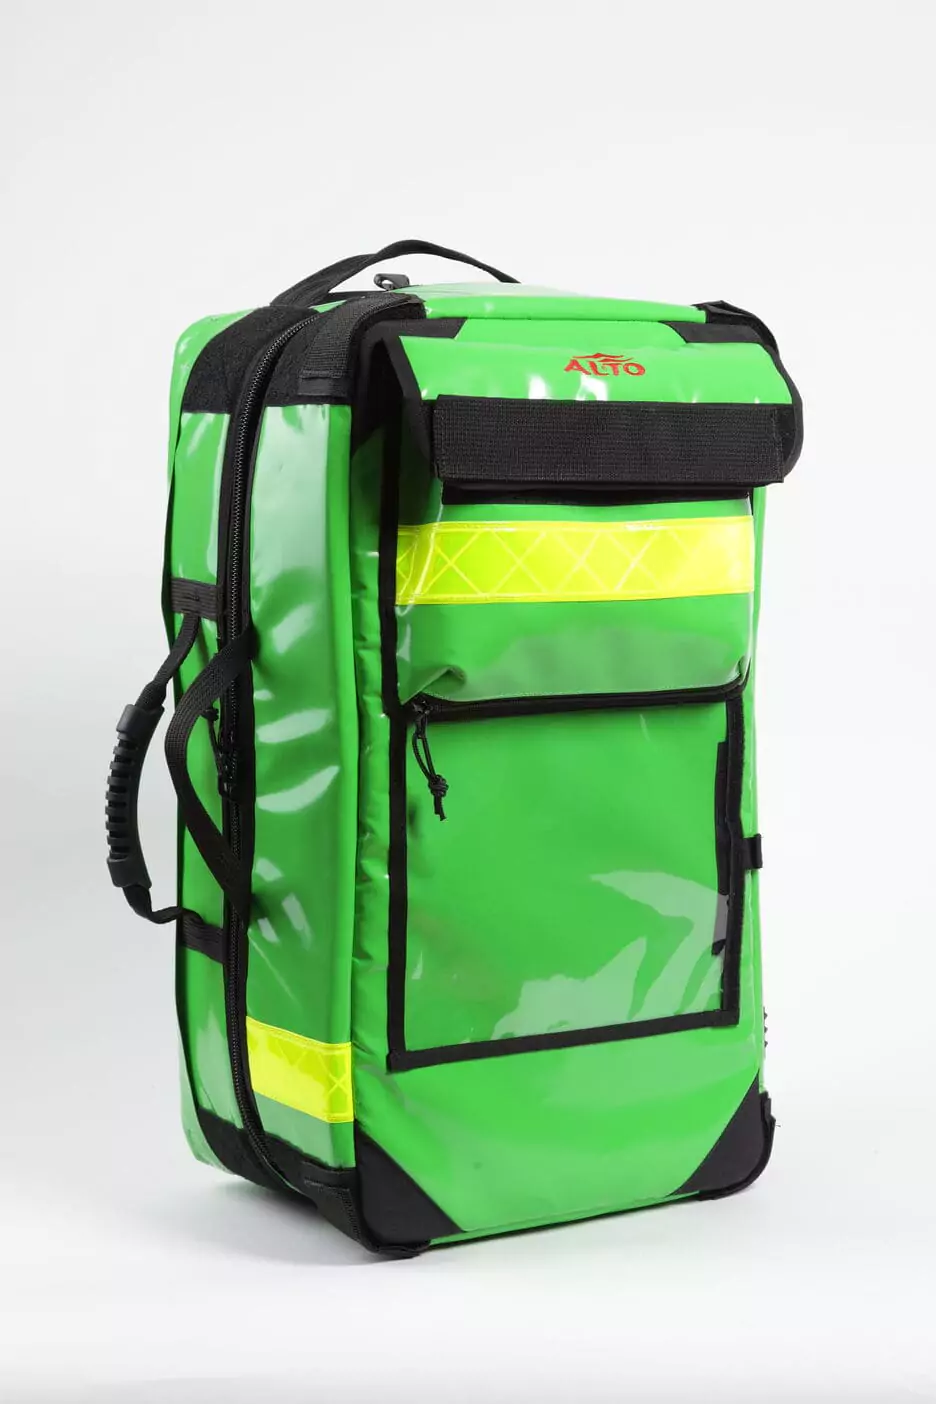 ABCD paramedic bag